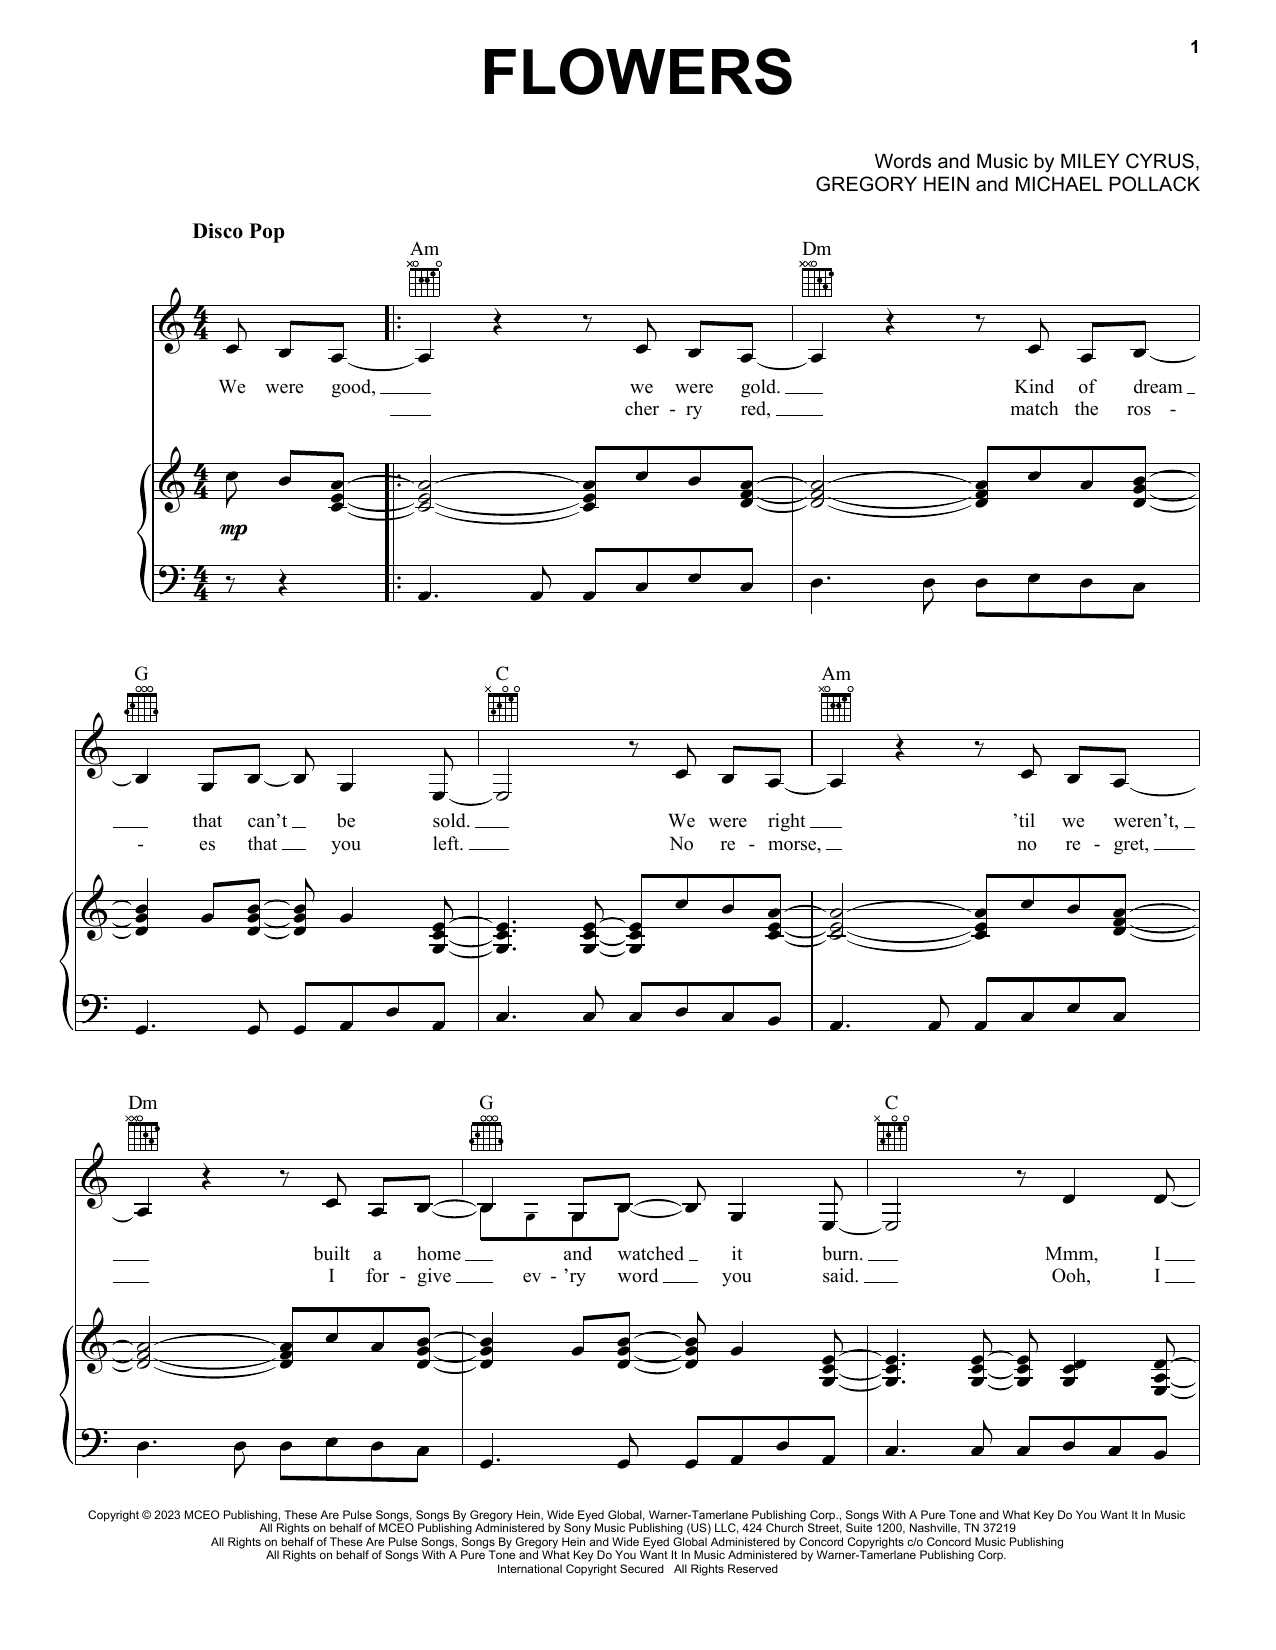 Miley Cyrus Flowers sheet music notes printable PDF score